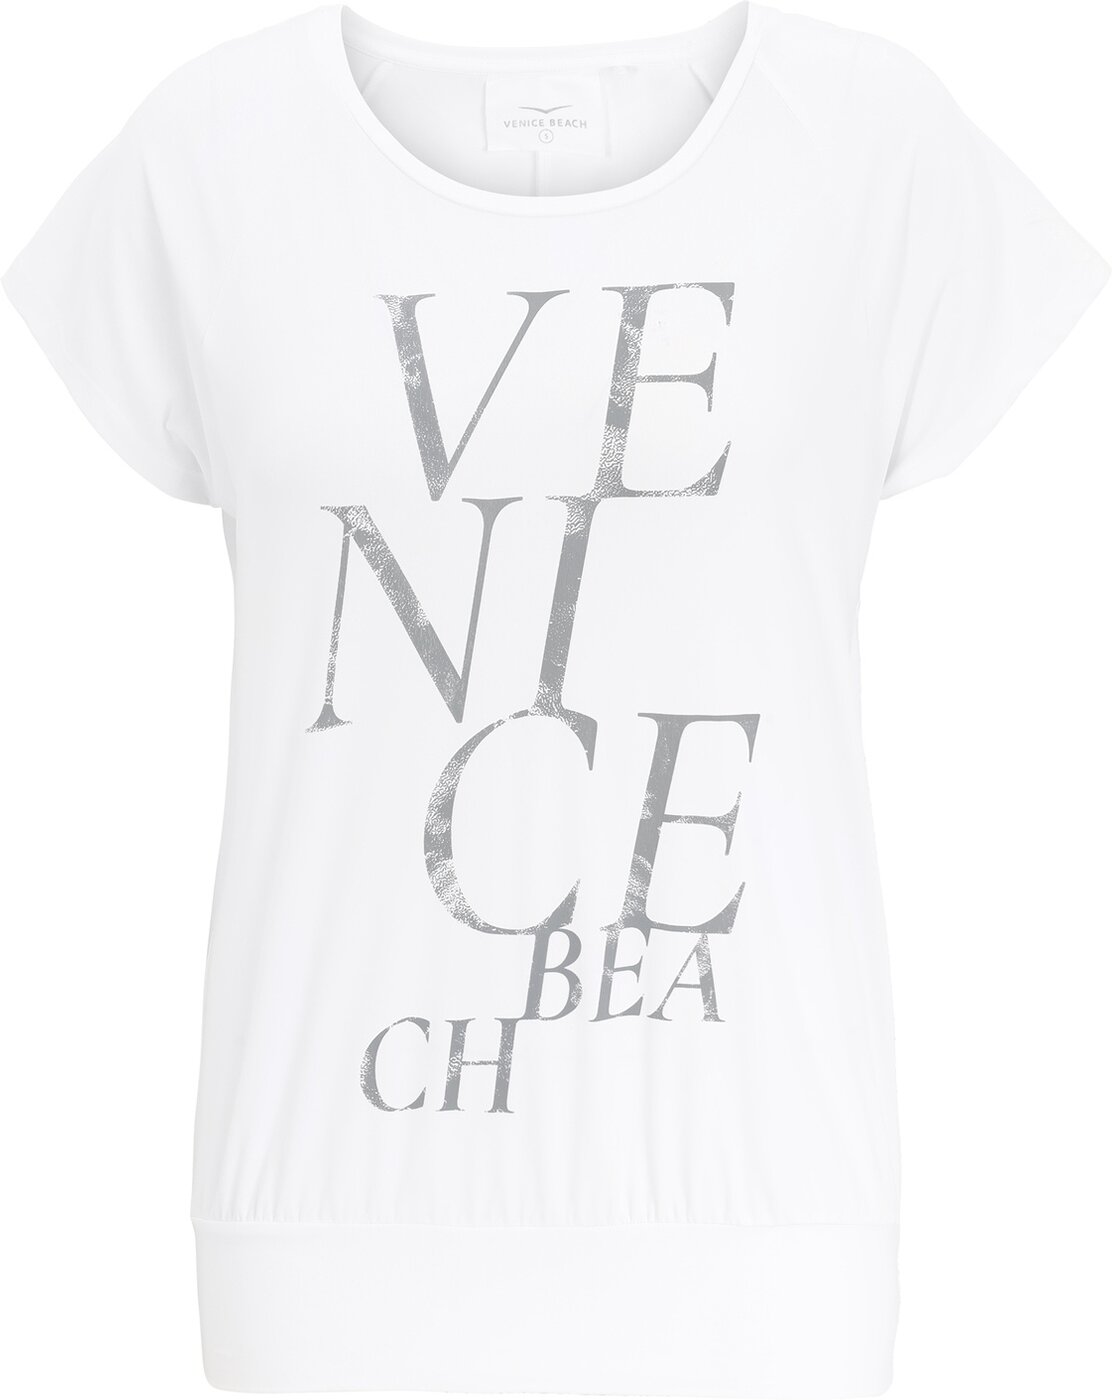 Venice Beach VB_Nobel DL online kaufen T-Shirt 02